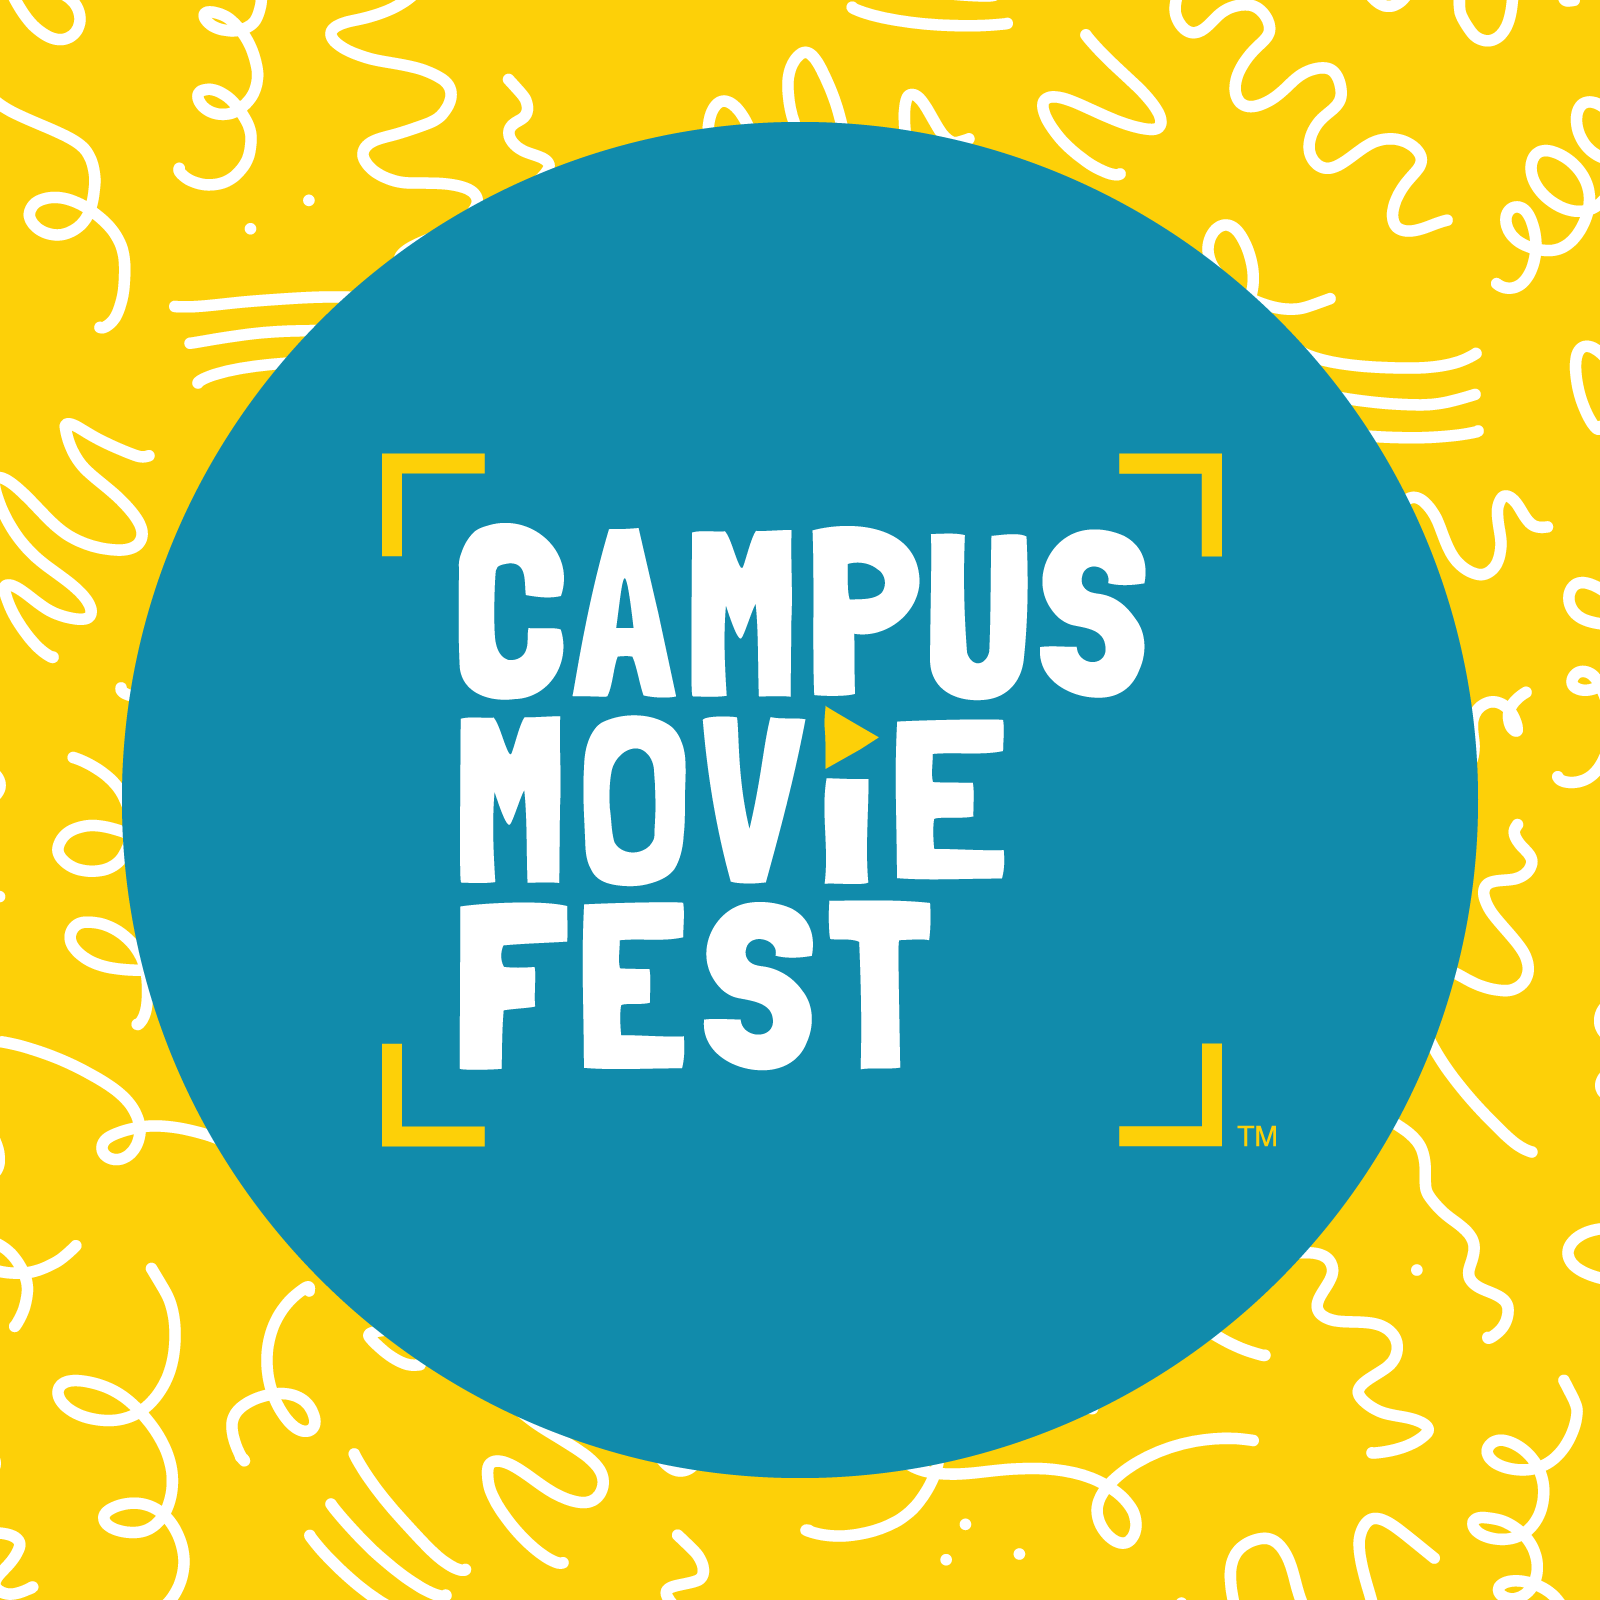 Campus Movie Fest Banner Image